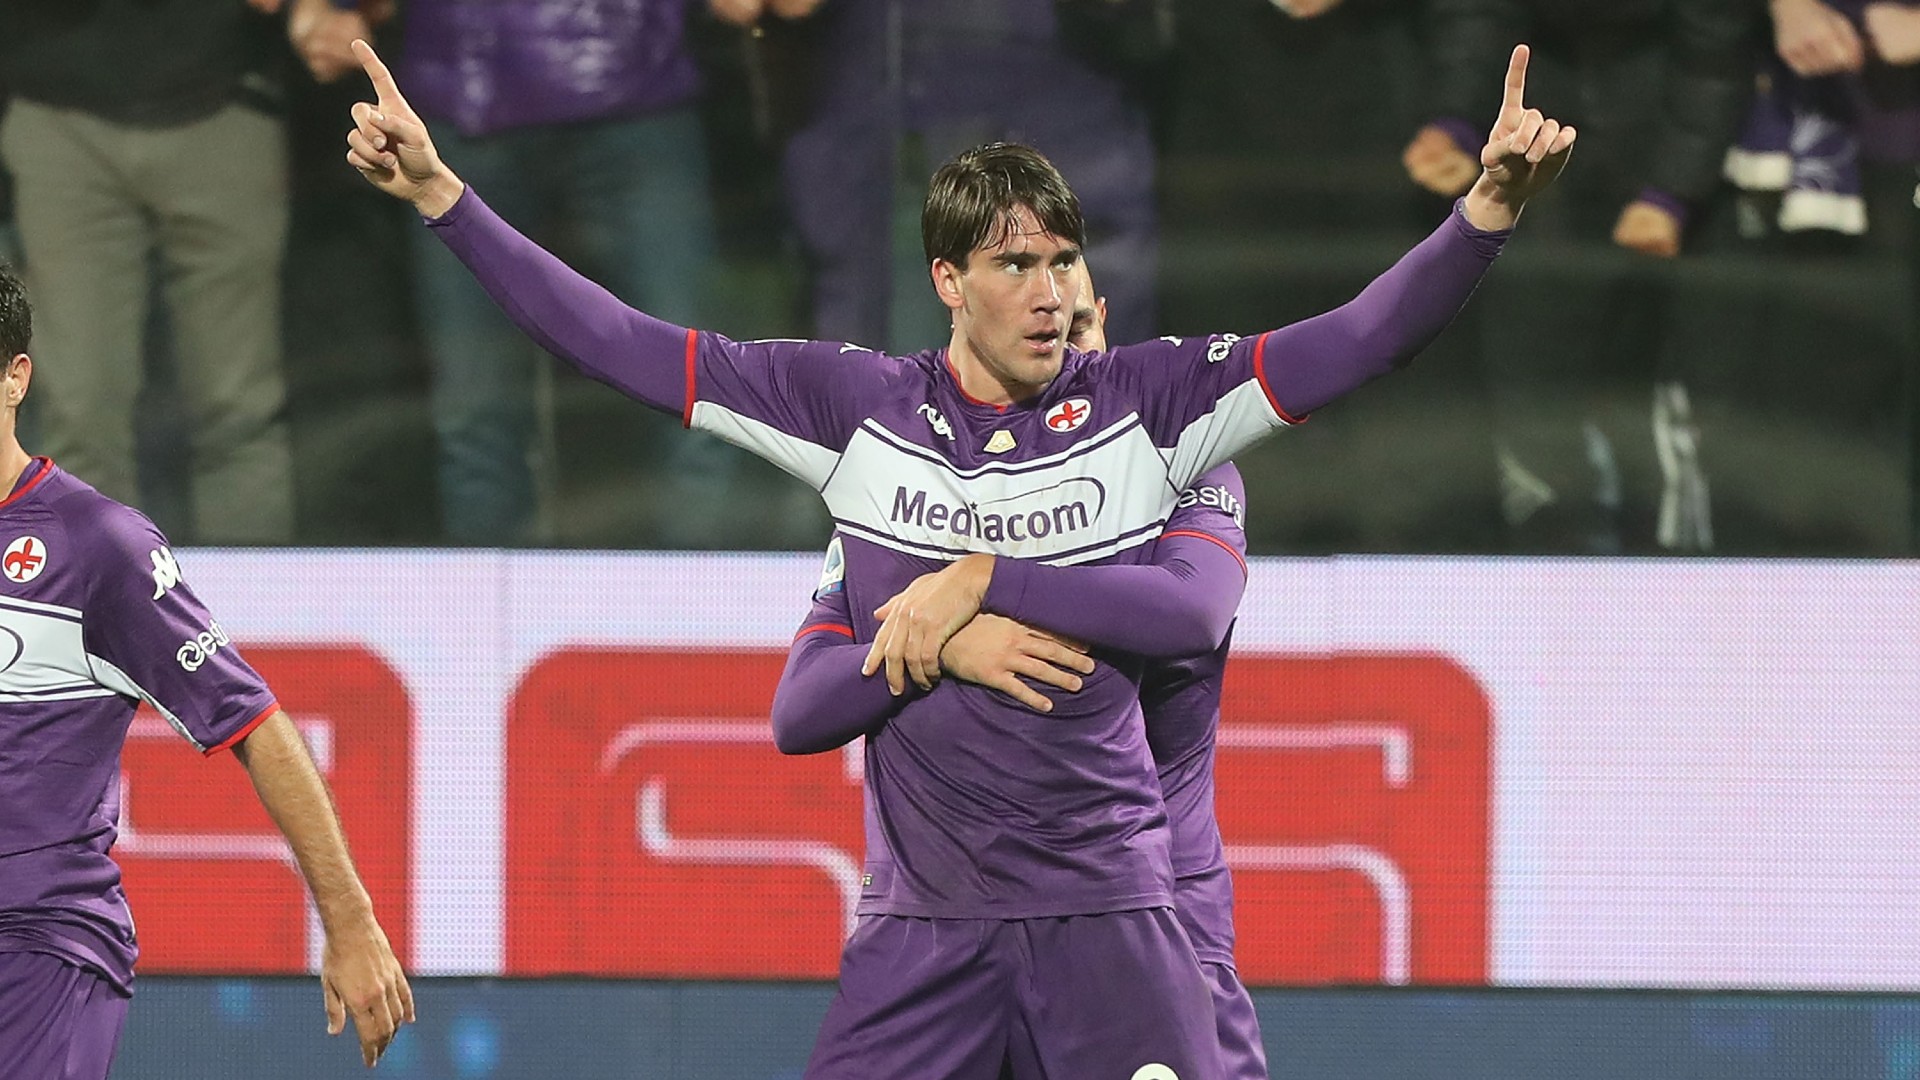 Inter's Marotta dismisses interest in Fiorentina star Vlahovic